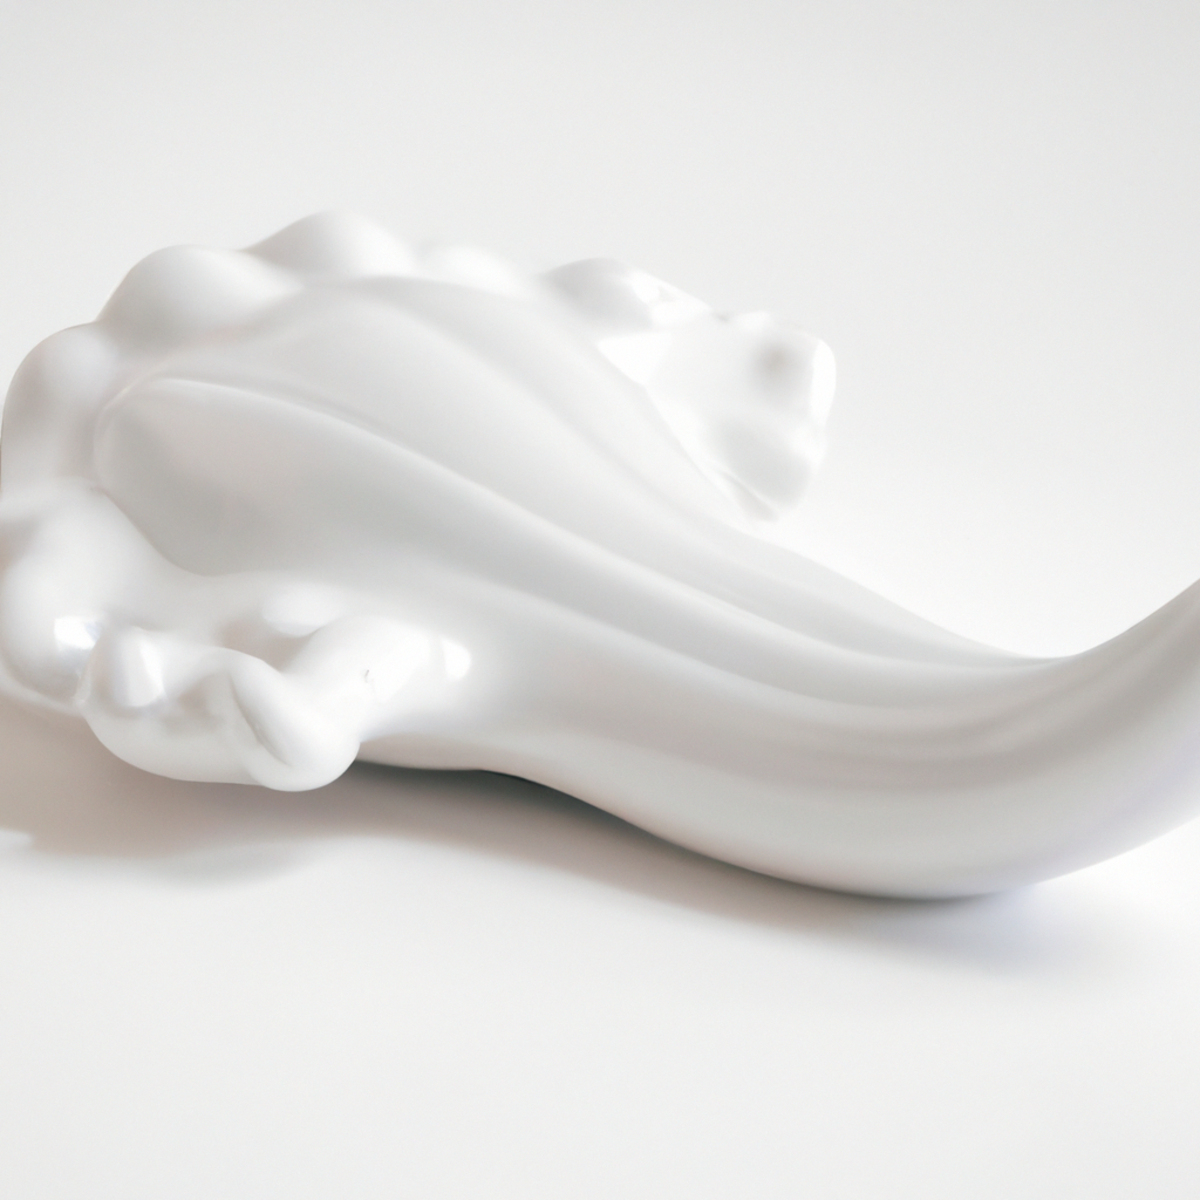 Delicate porcelain gallbladder sculpture demands urgent attention with flawless craftsmanship and captivating play of light and shadows - Porcelain Gallbladder 